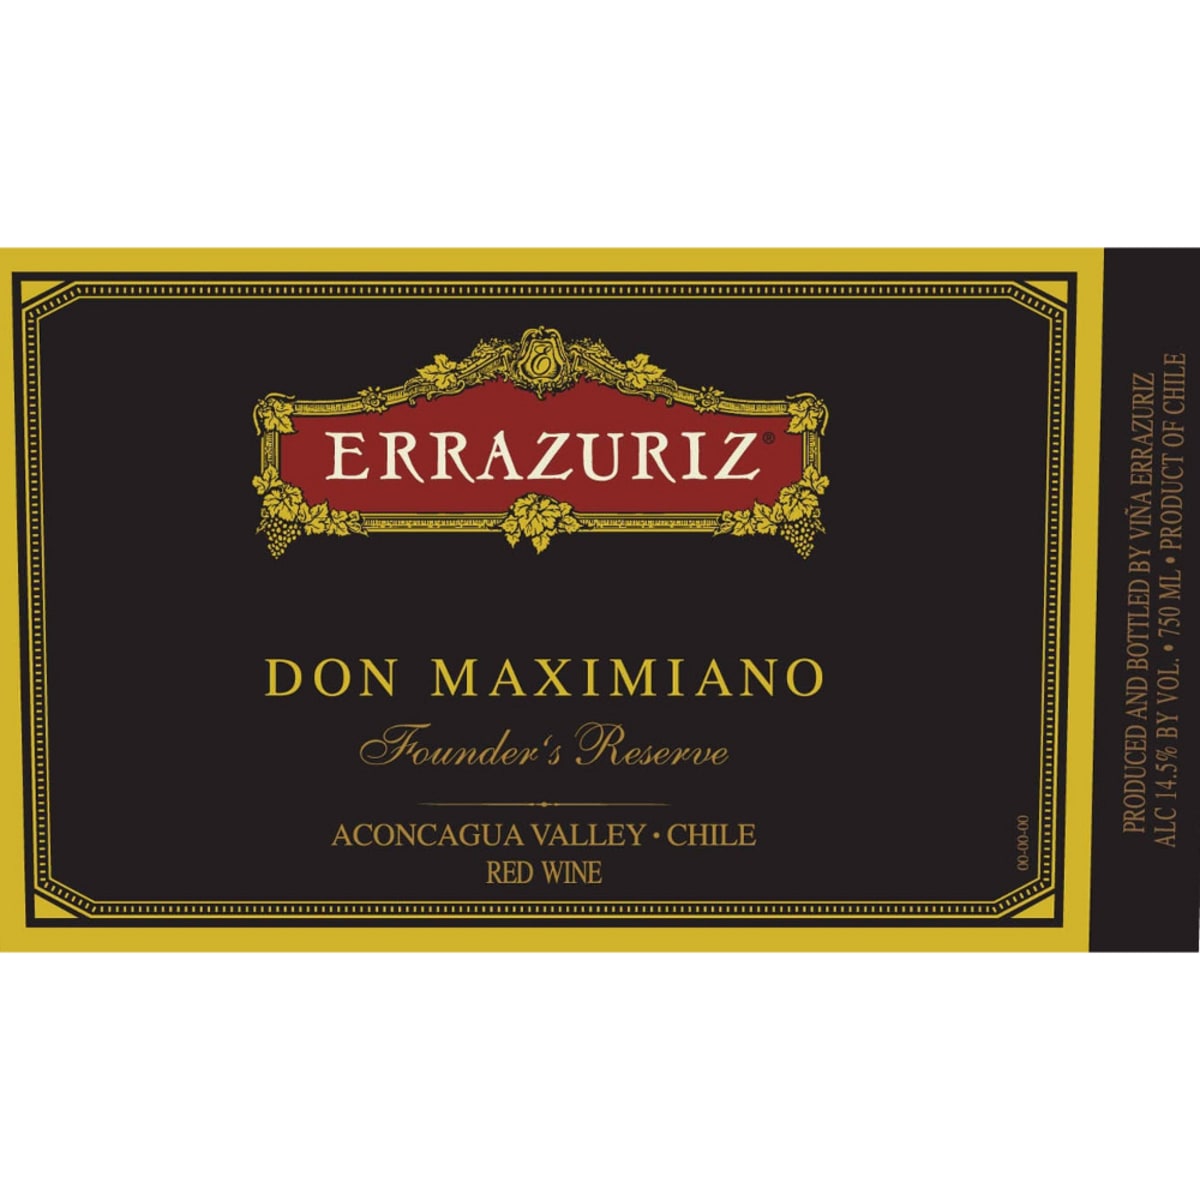 Errazuriz Don Maximiano Founder's Reserve 2010 Front Label